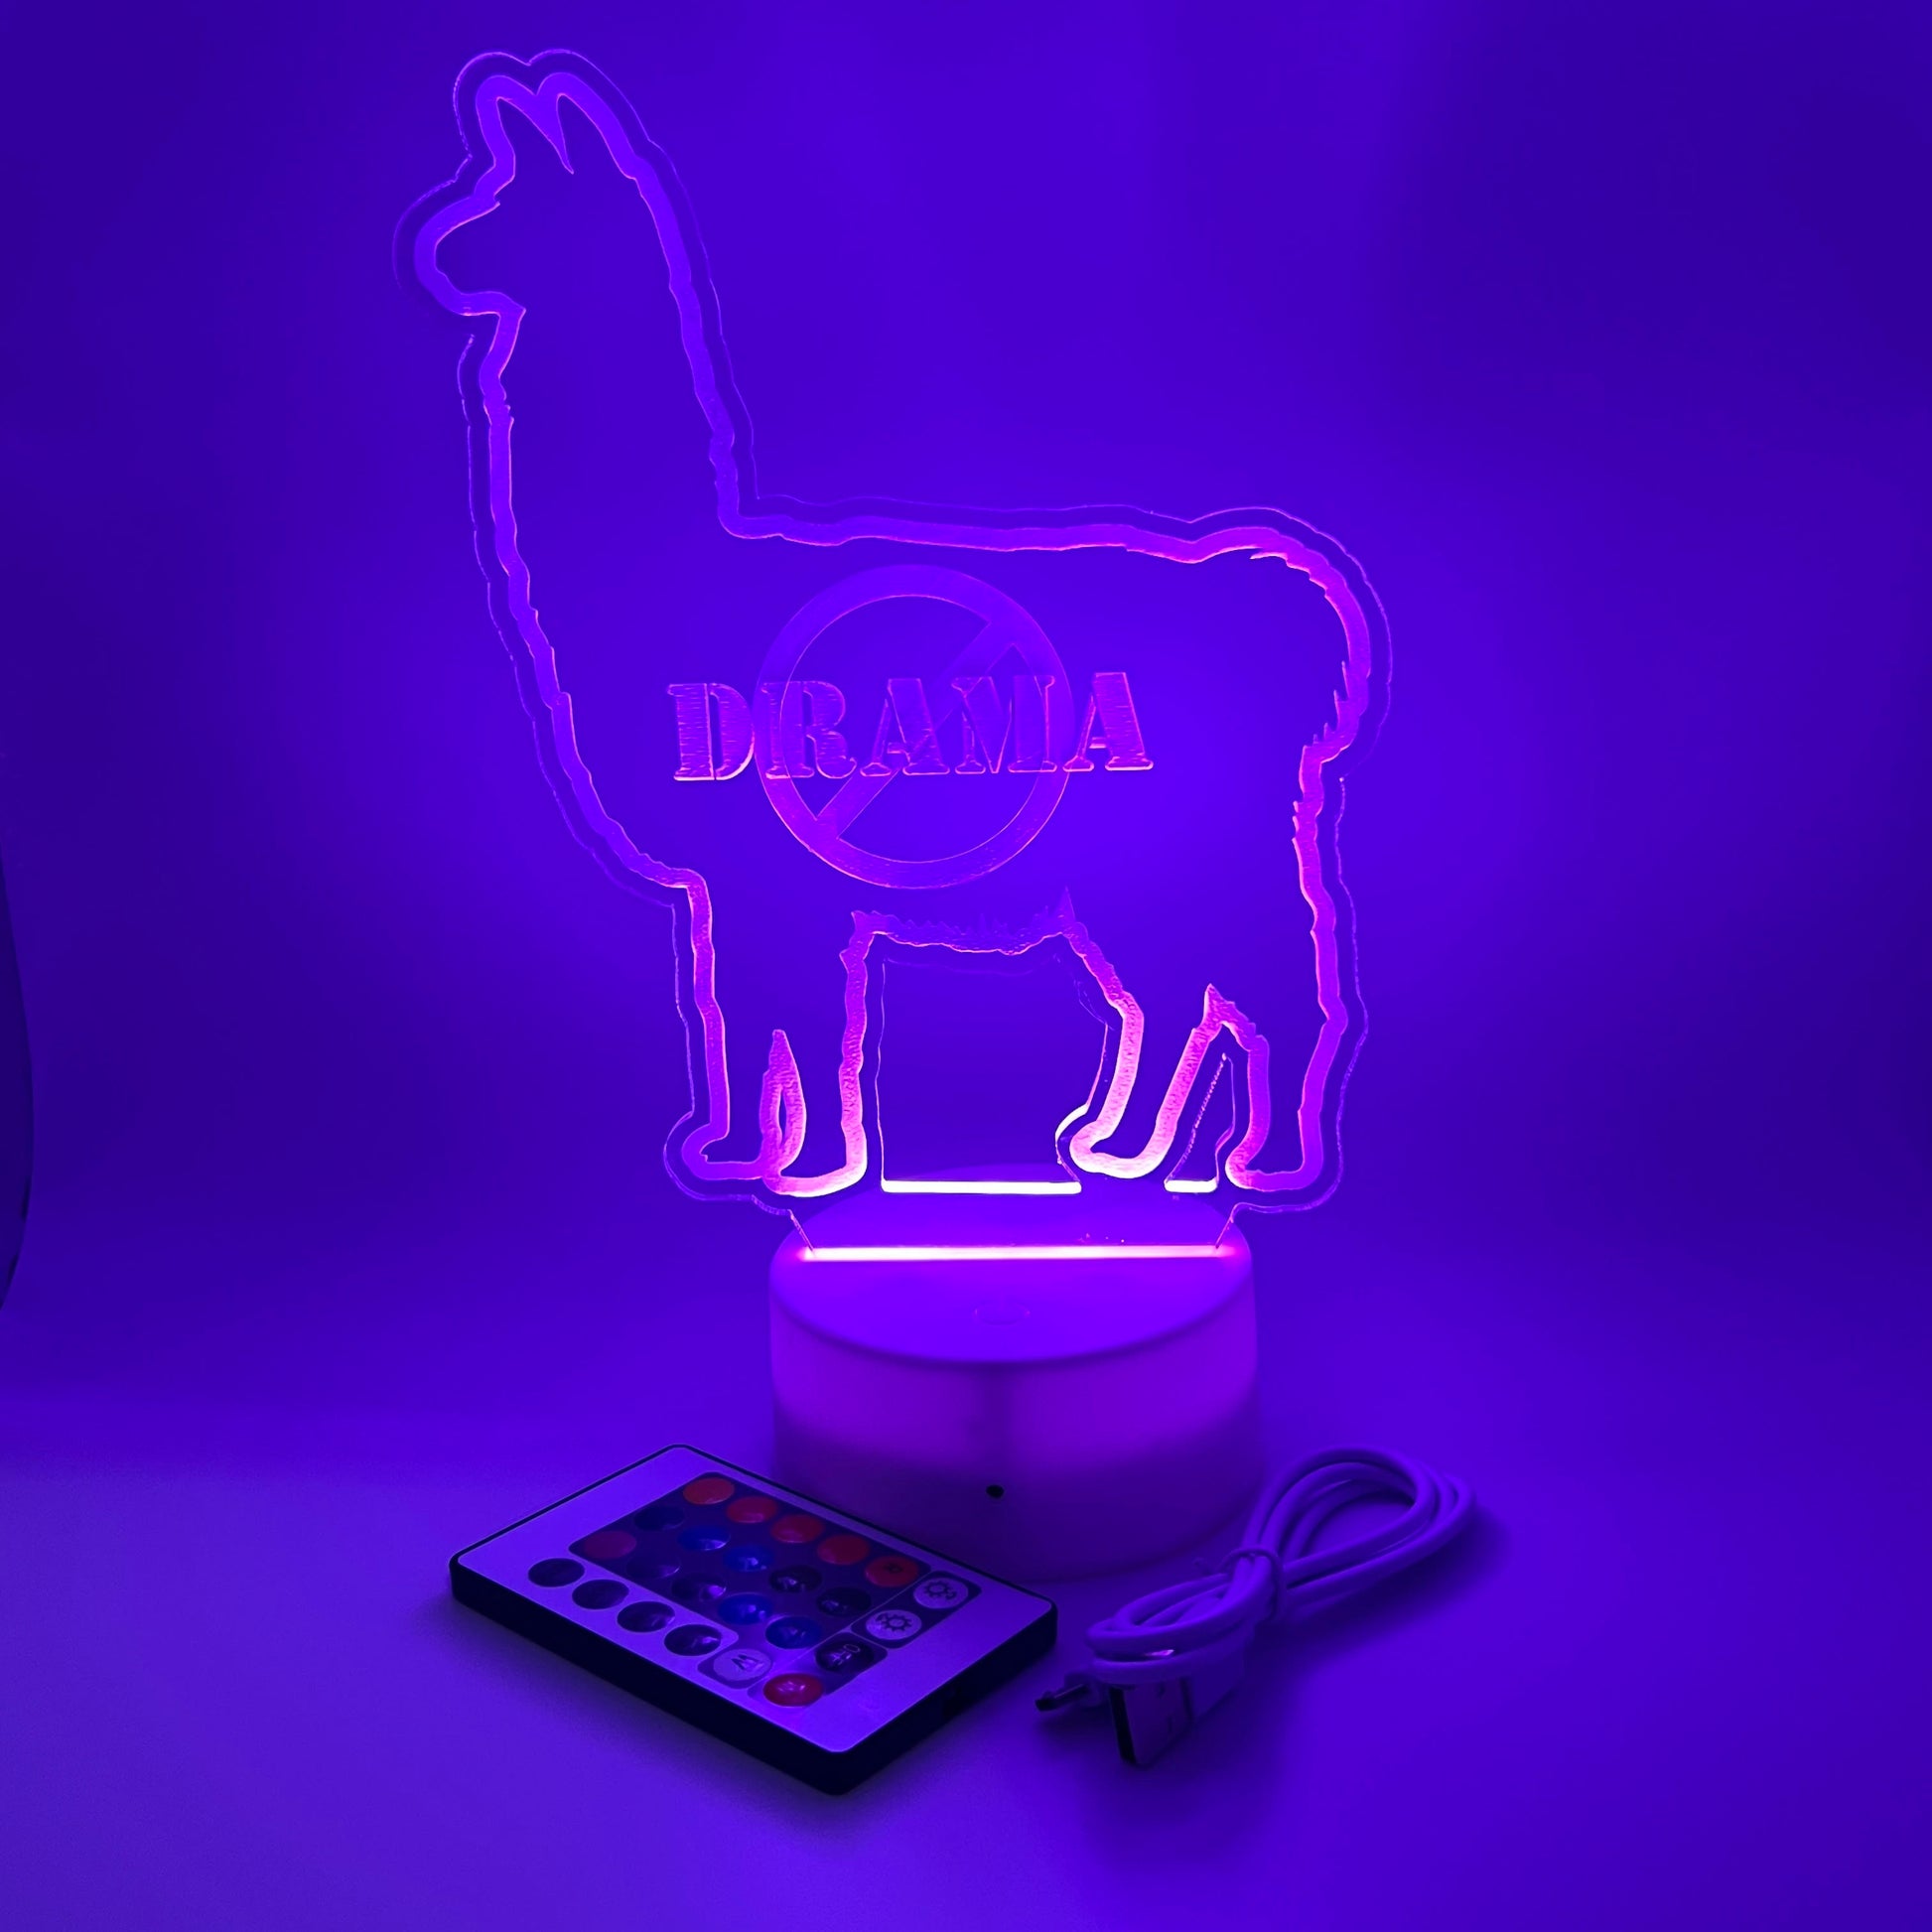 DIY light box letters - No Drama Llama - Ideas - edding